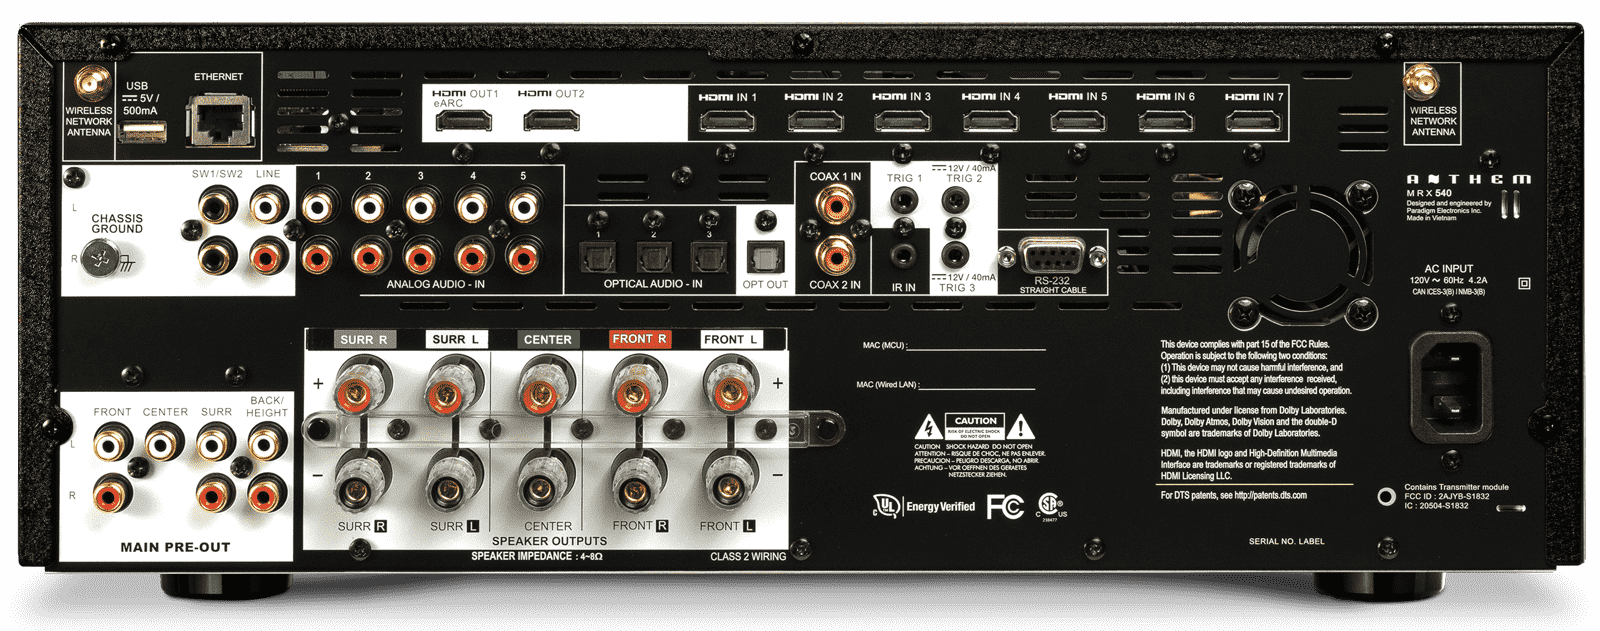 Anthem MRX 540 7.2 AV Amplifier